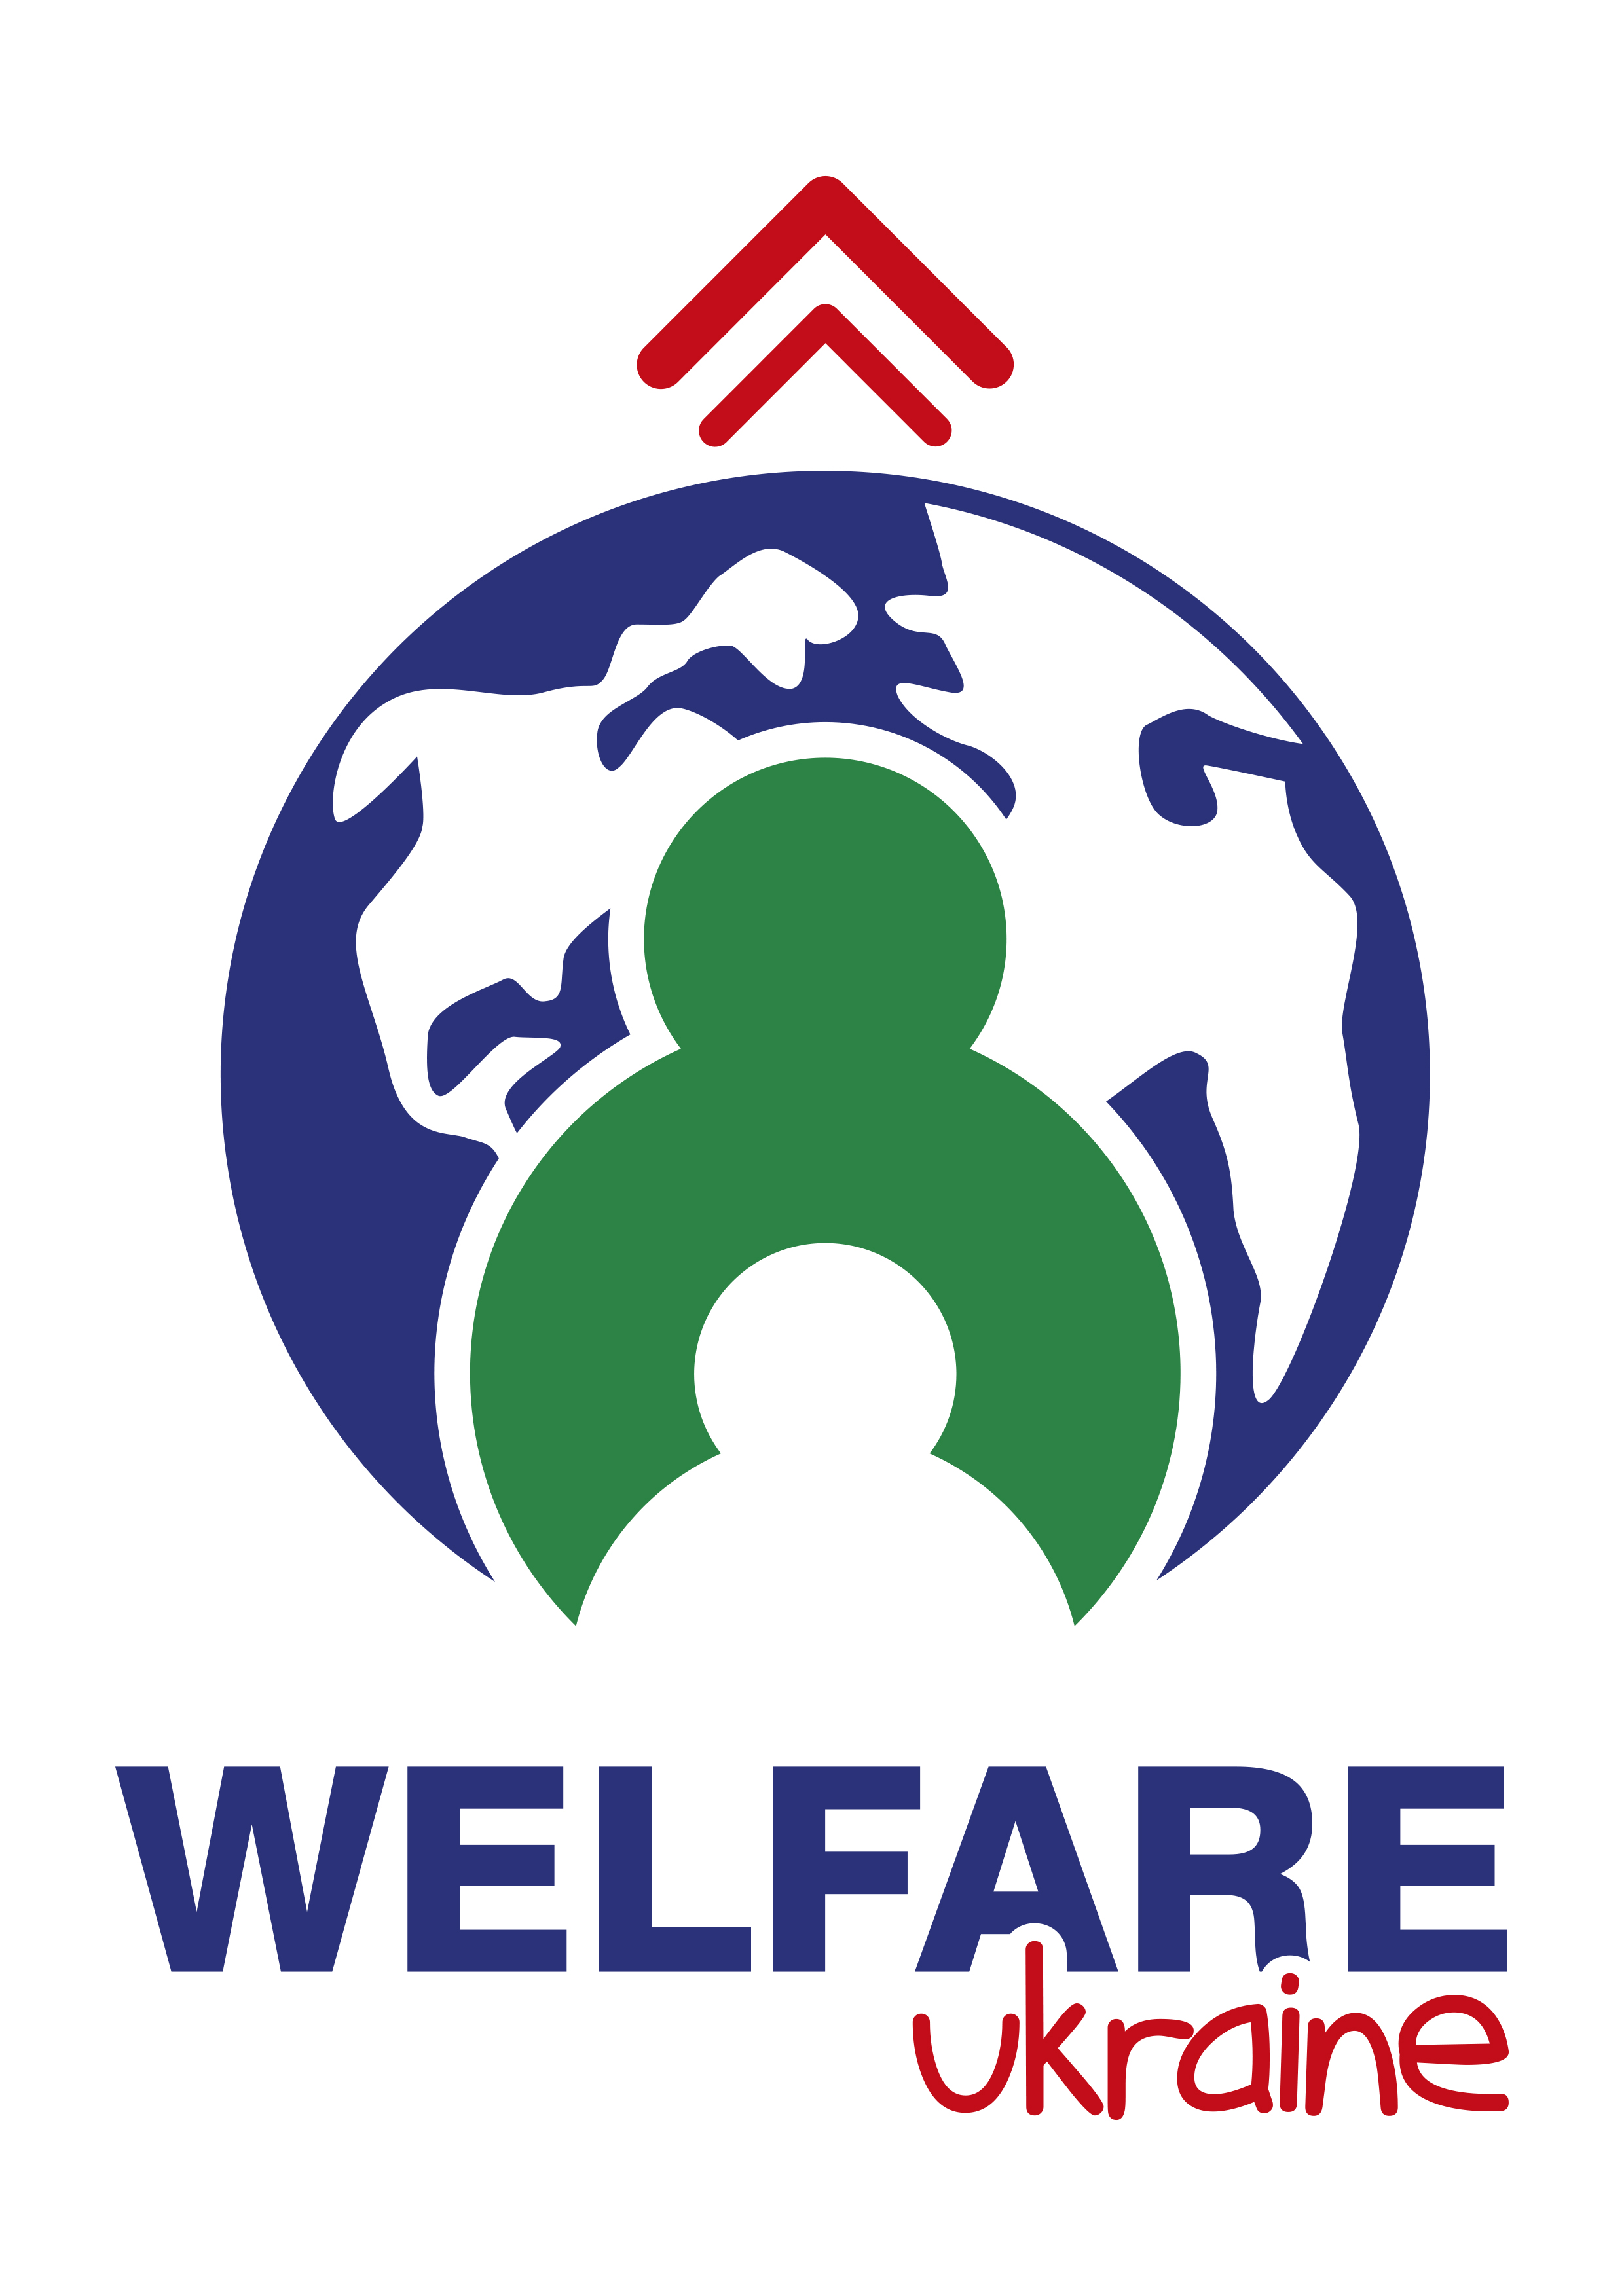 Welfare Ukraine